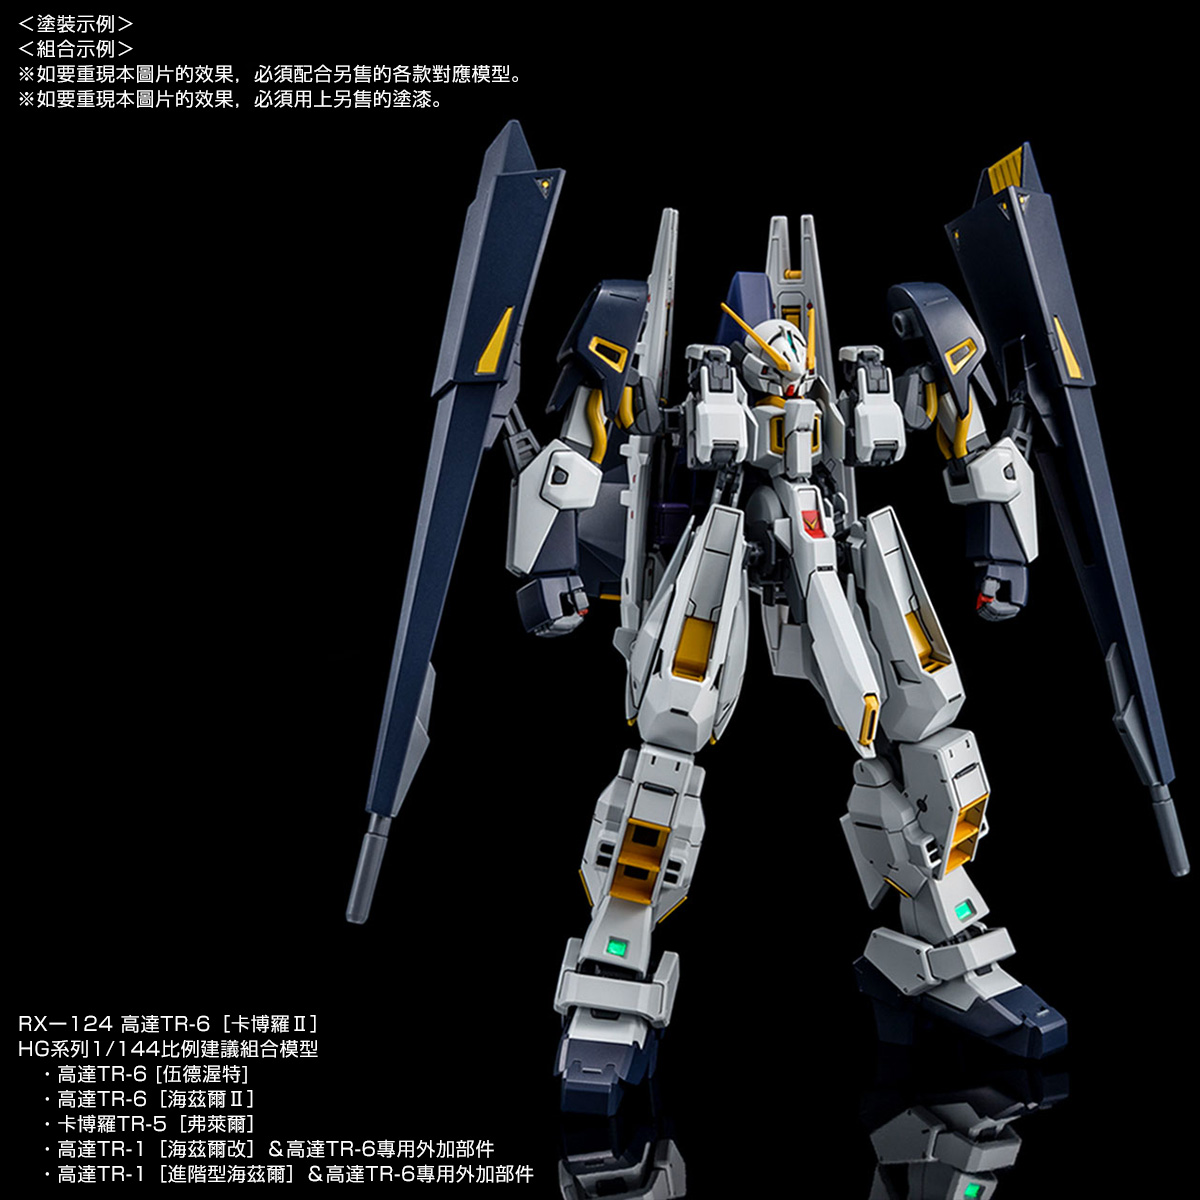 Gundam TR-1 Hazel Custom and TR-6 P-BANDAI HGUC 1//144 Expansion Parts for